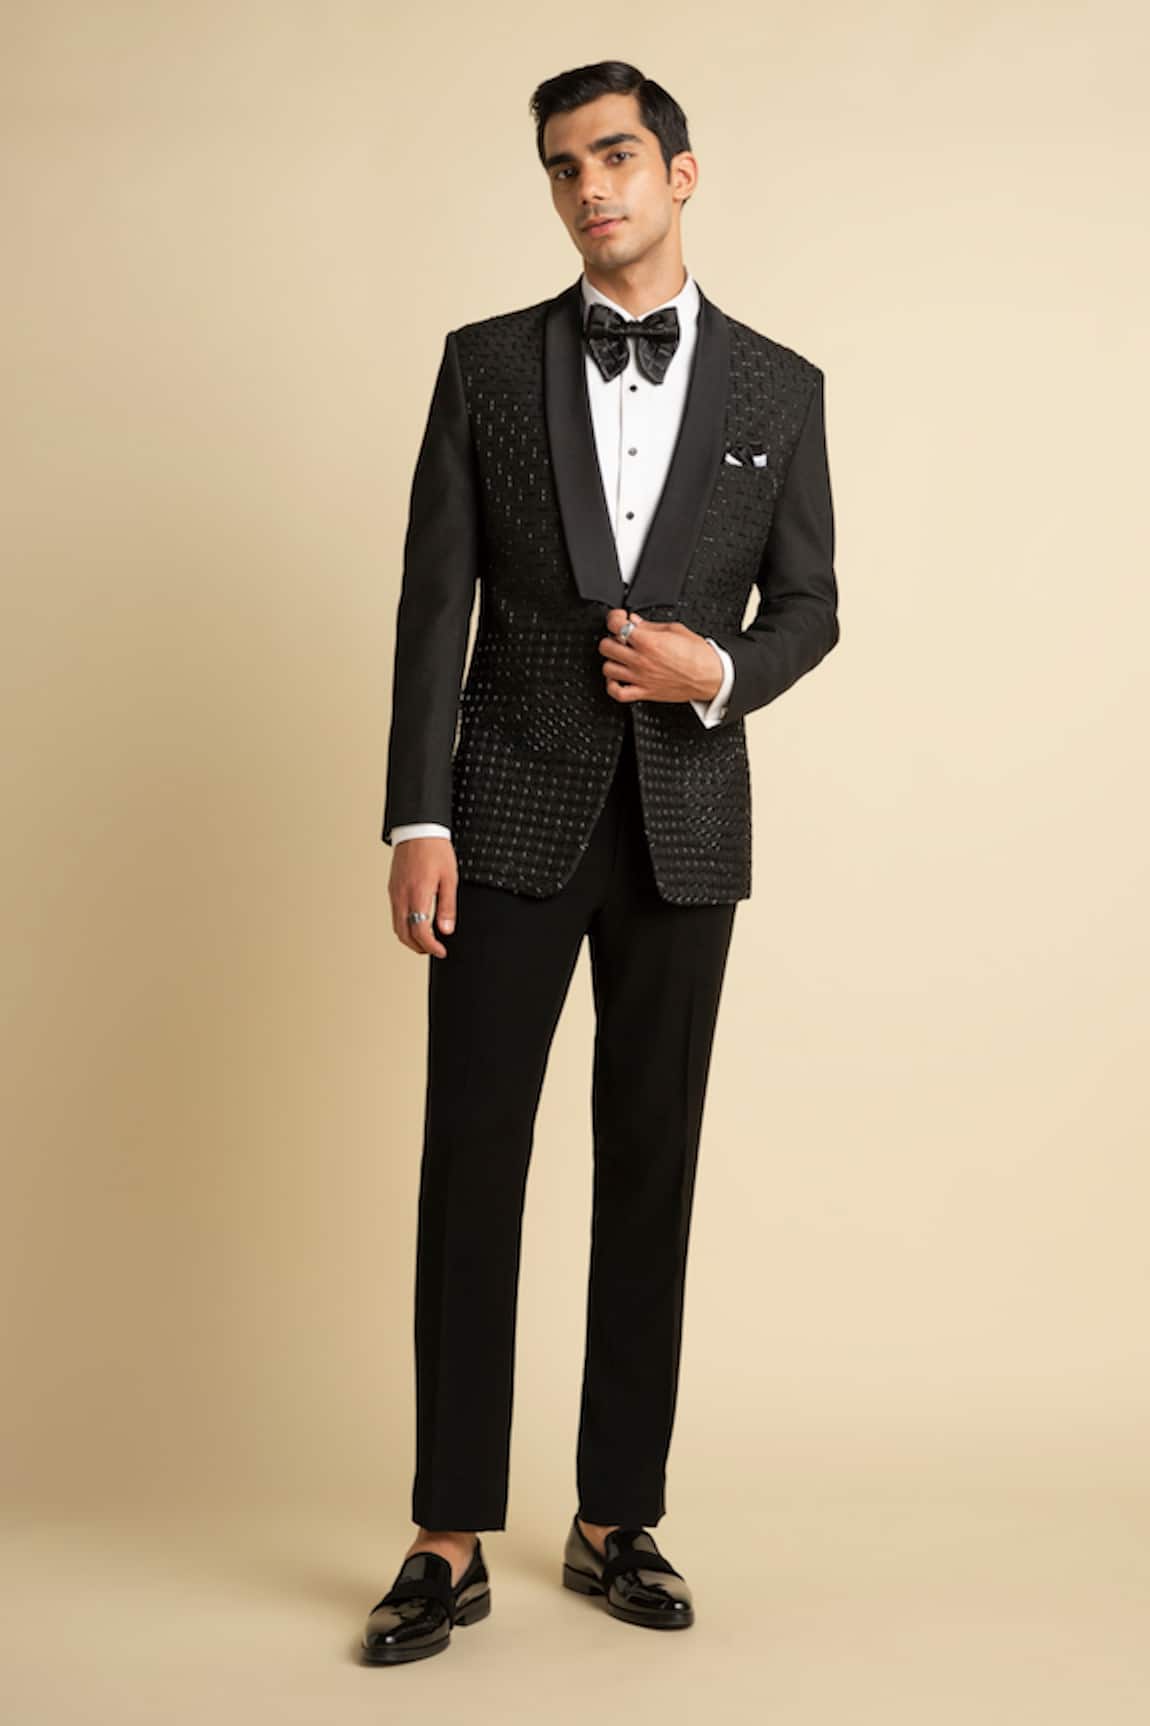 Philocaly Ritz Cutdana Embellished Tuxedo